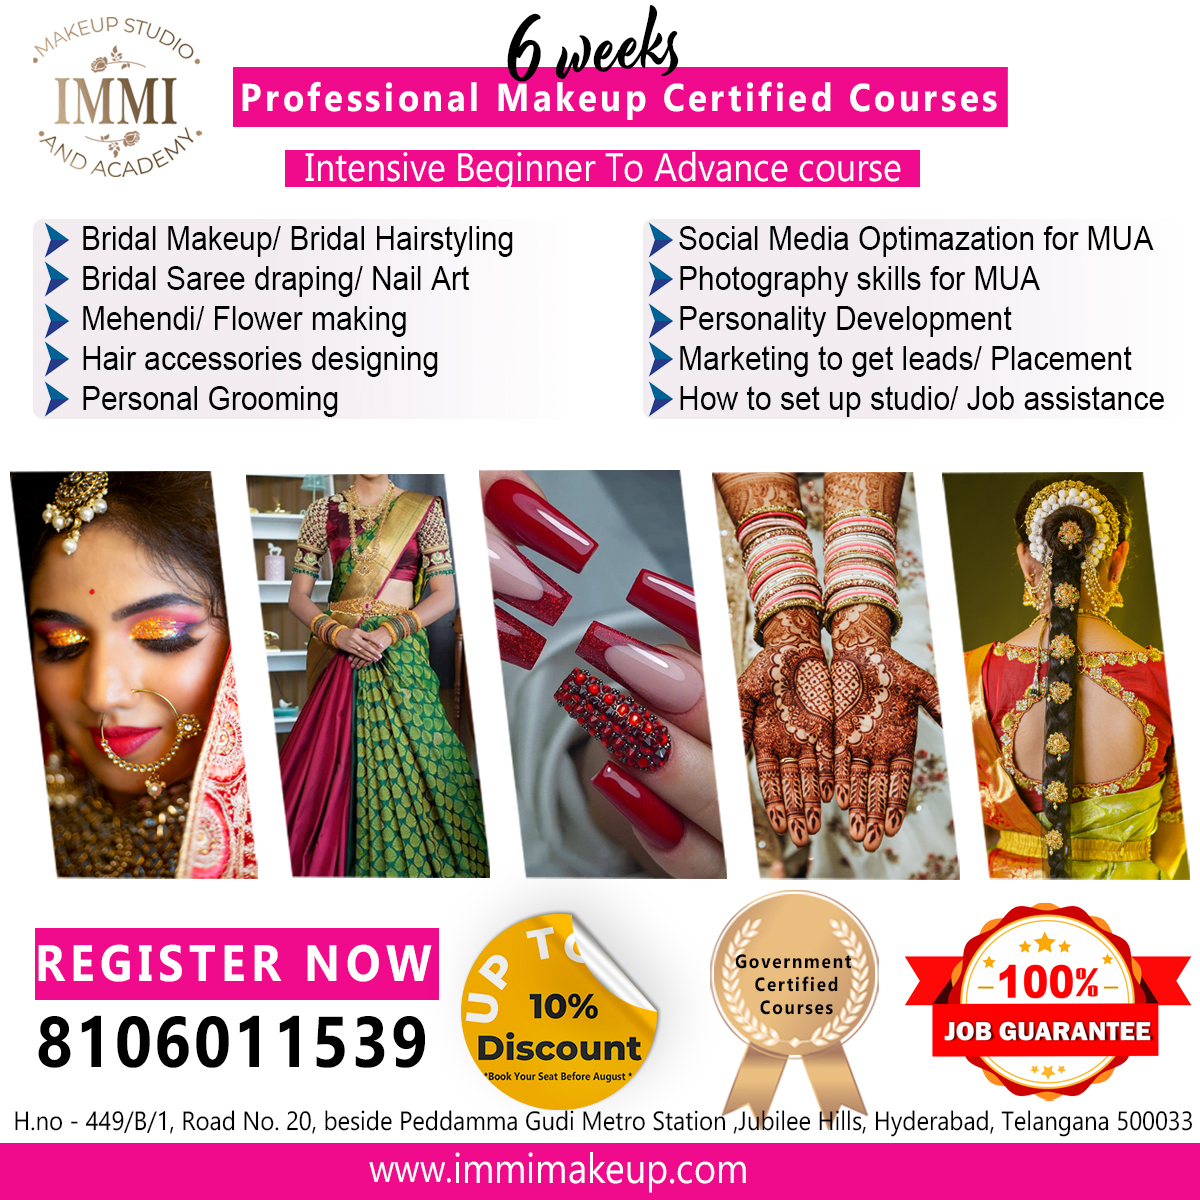  Makeup, Hairstyling, Nail Art and Saree Draping certified Courses